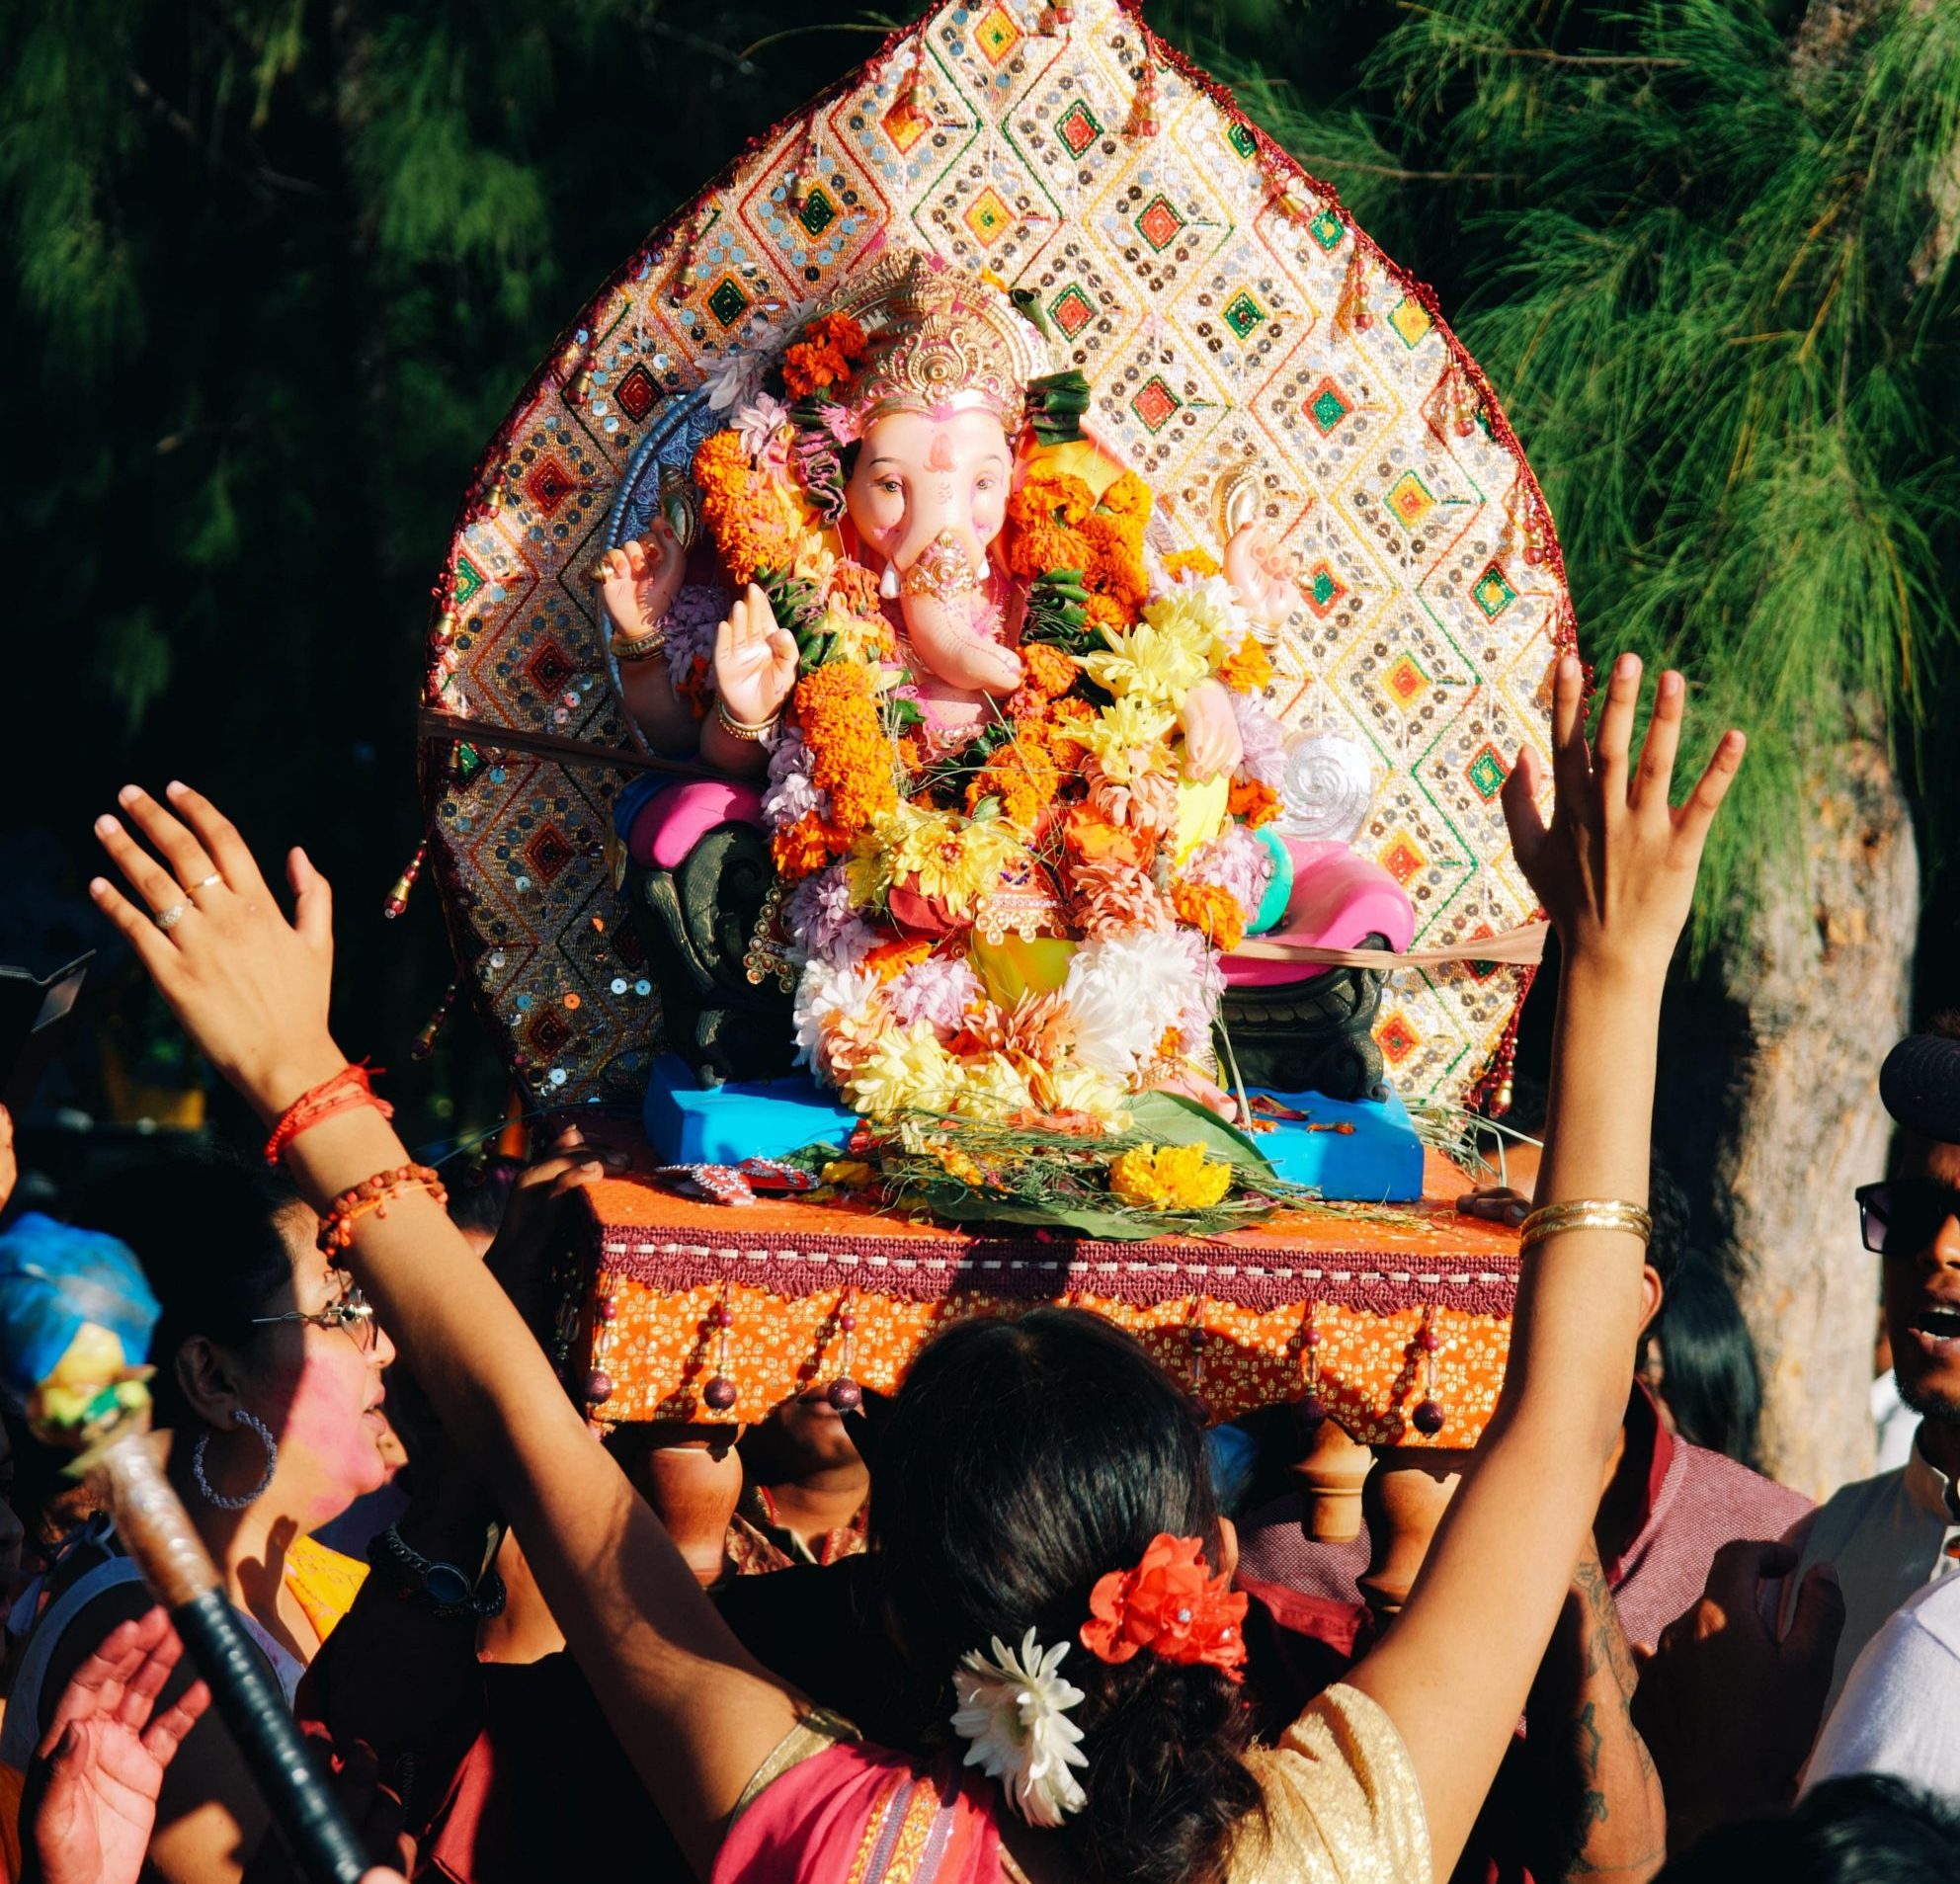 South Asian religious ceremony